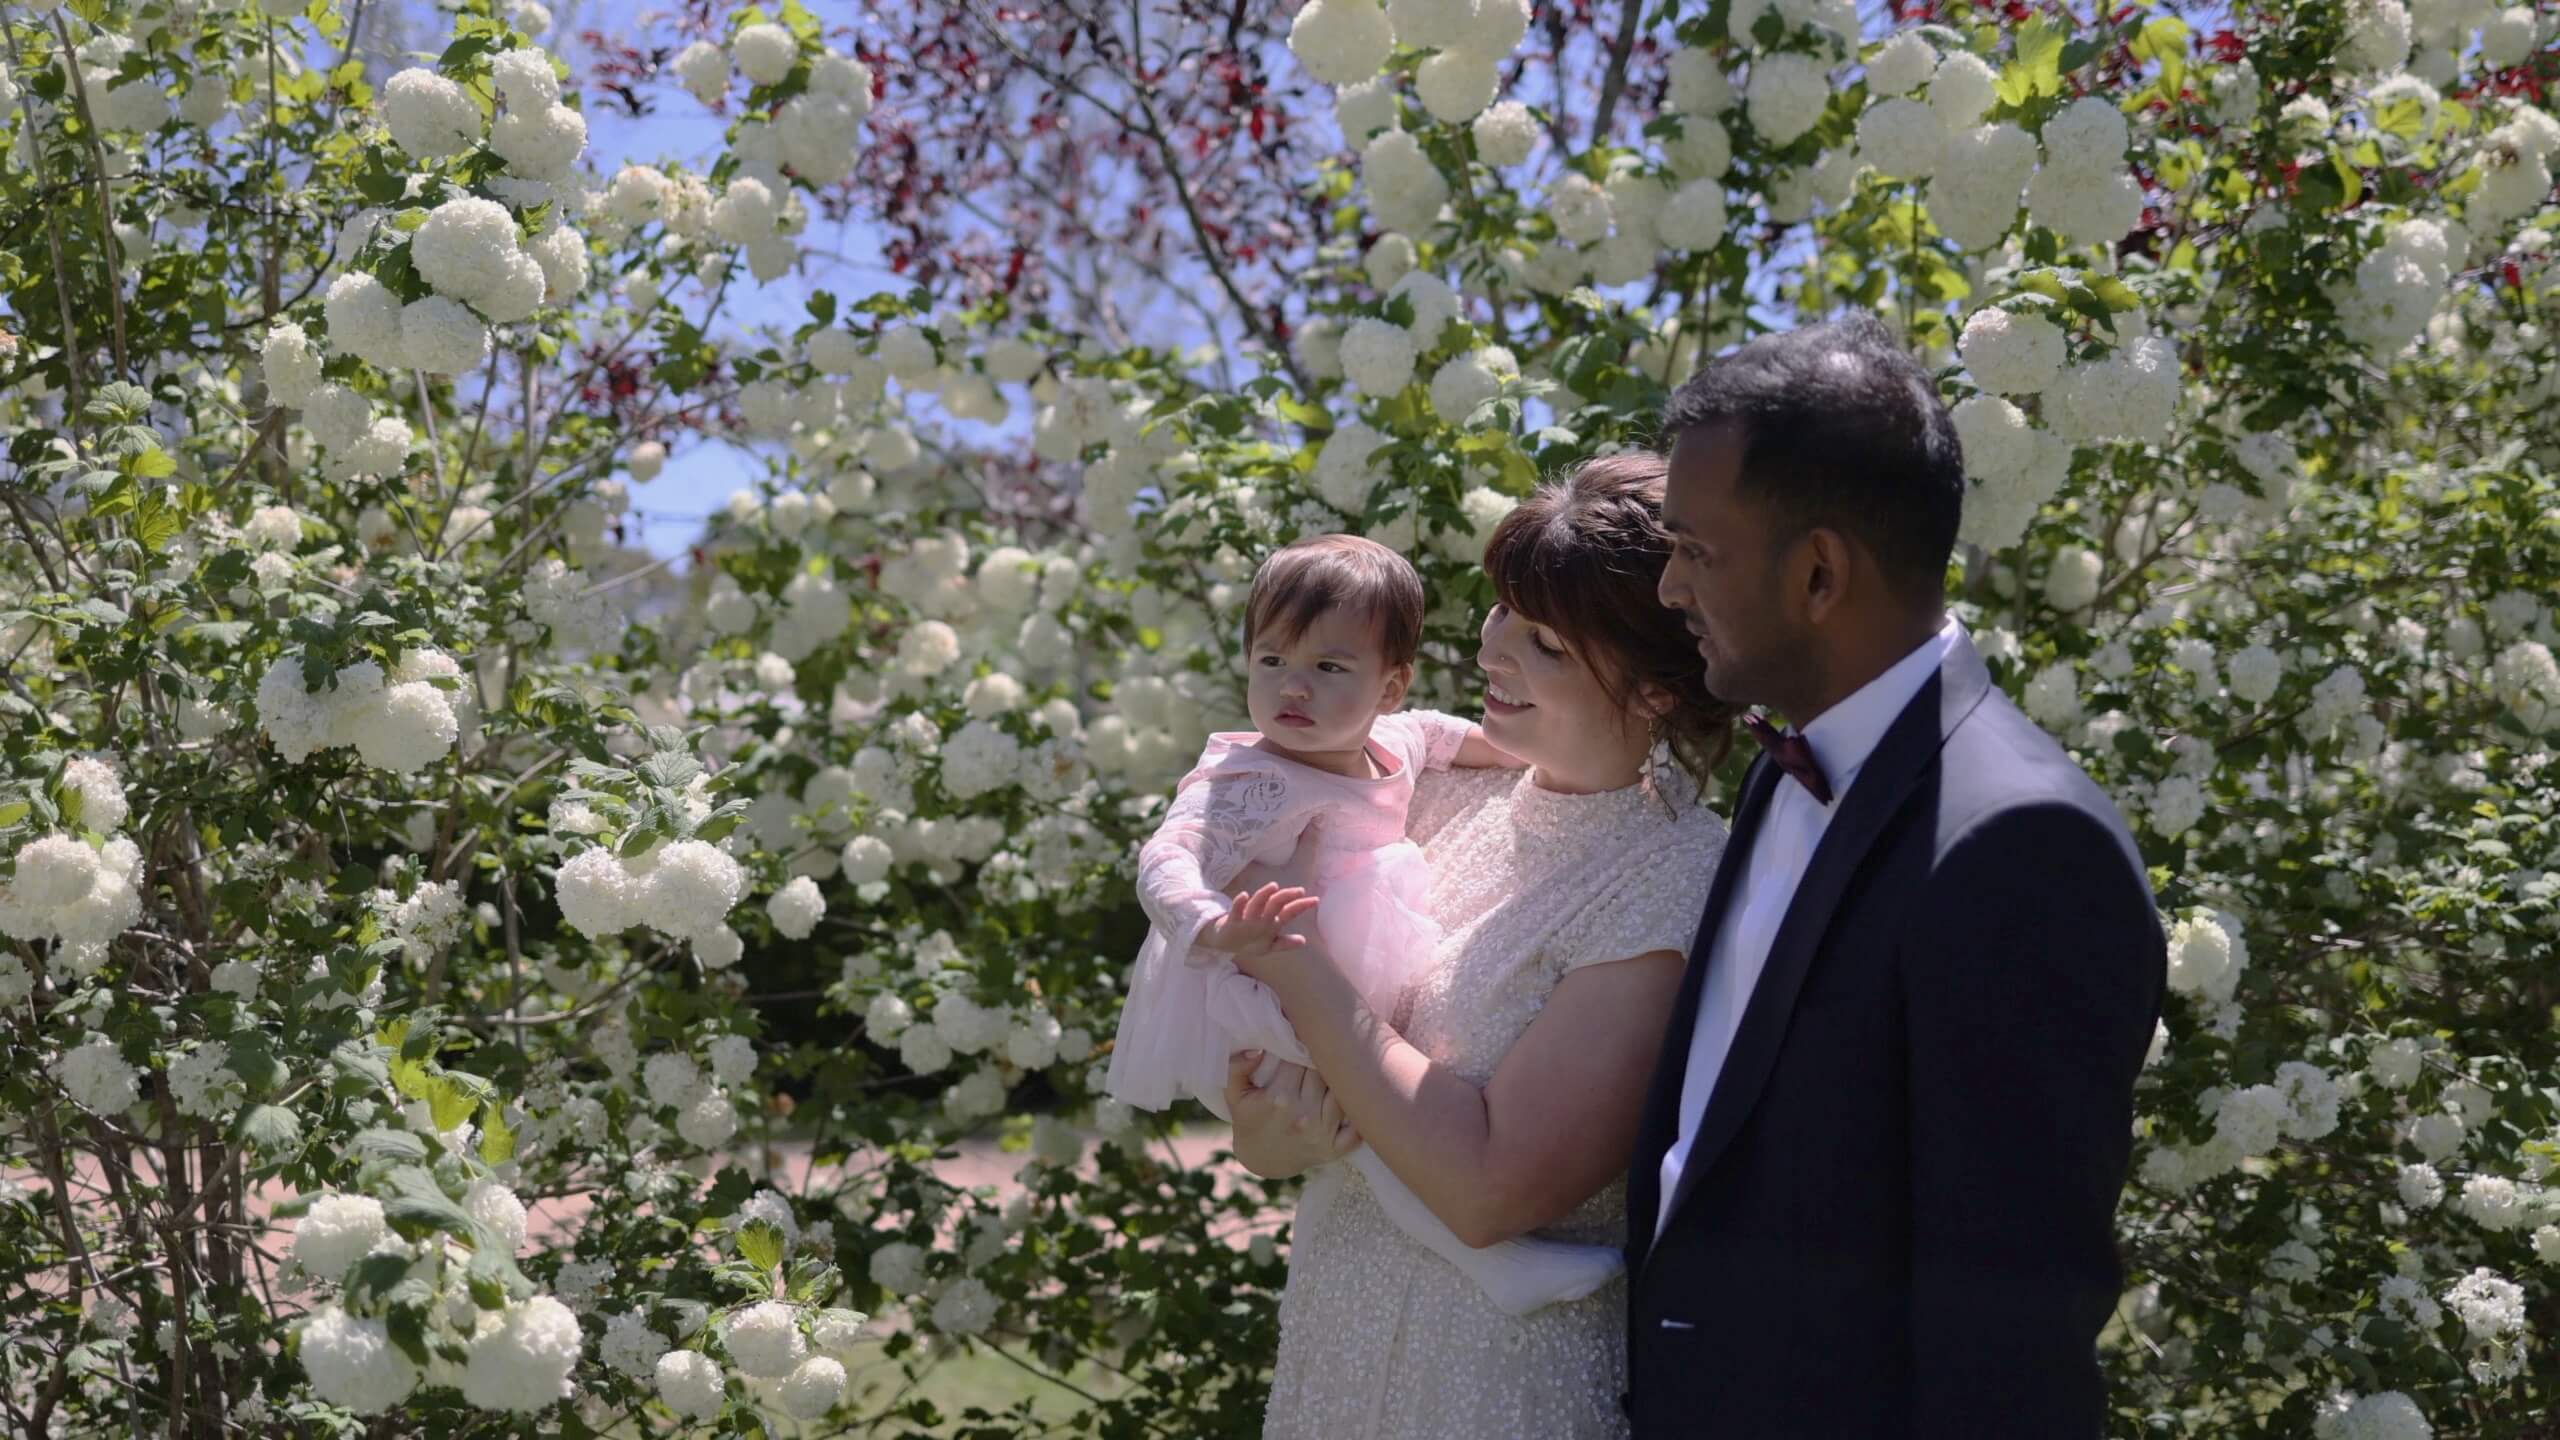 Kerri + Clive Highlight Film // The Secret Garden // Southern Highlands Wedding Videography